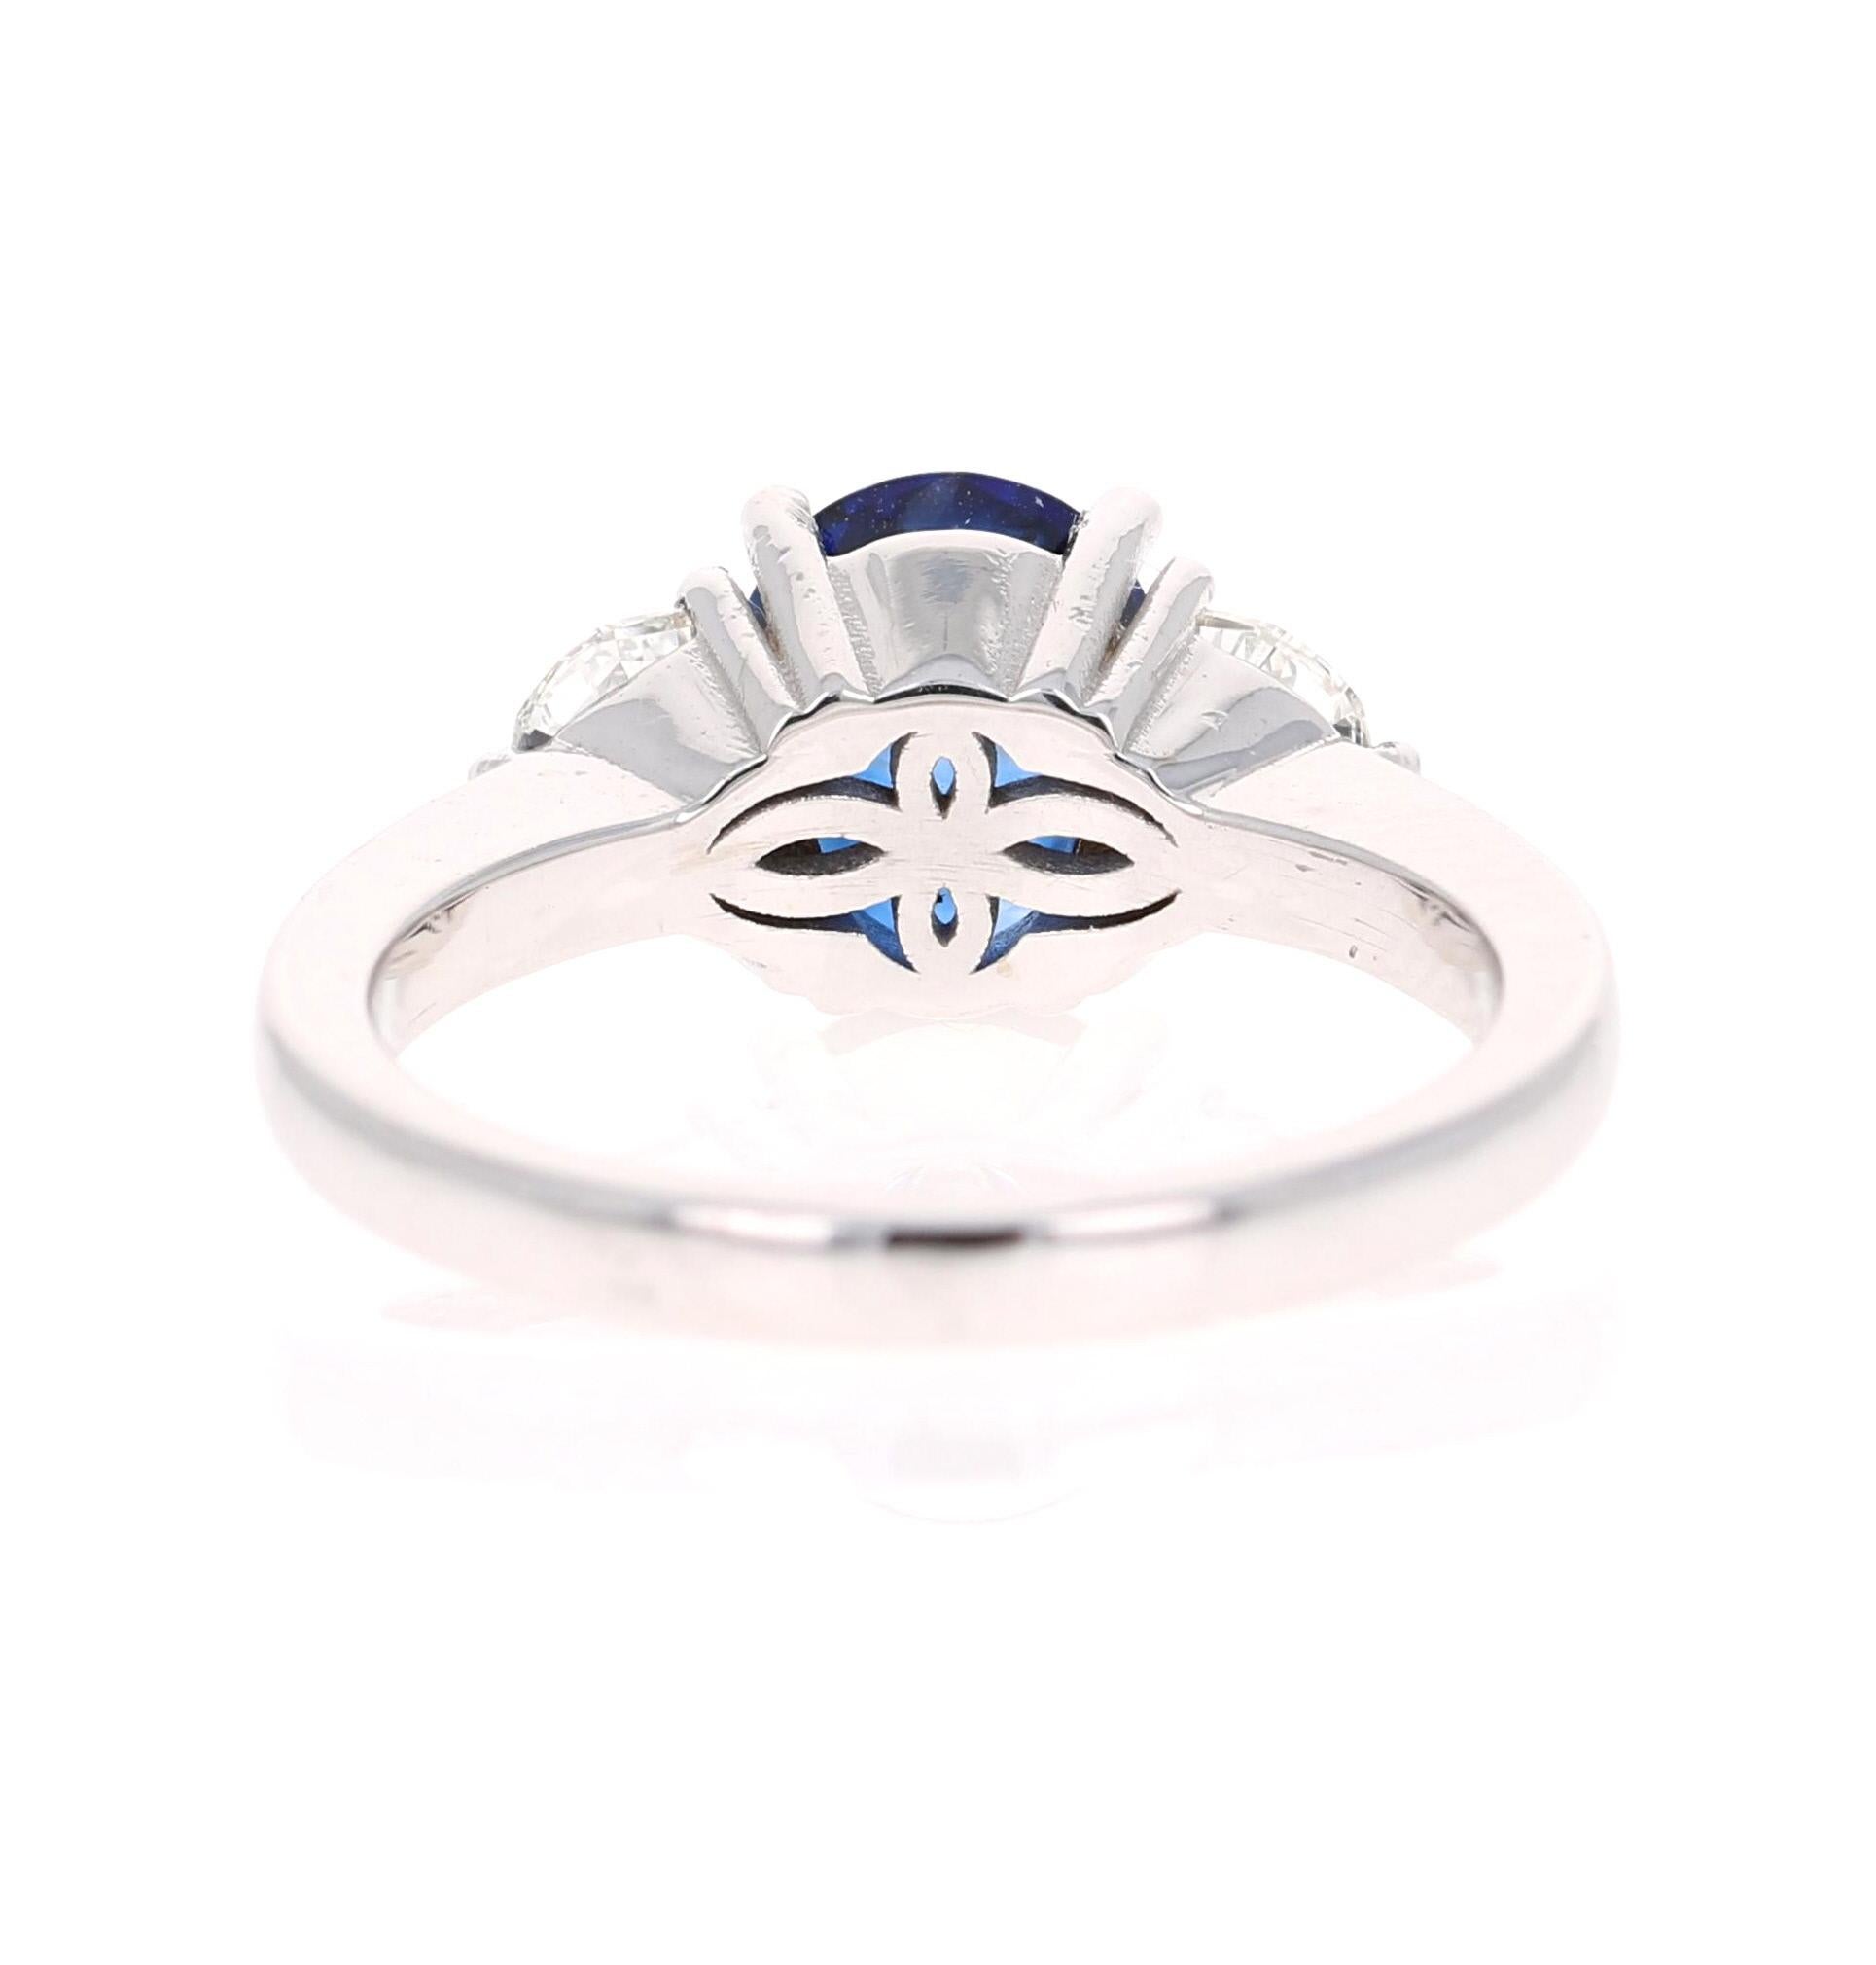 Oval Cut 2.64 Carat GIA Certified Sapphire Diamond 18 Karat White Gold Three-Stone Ring